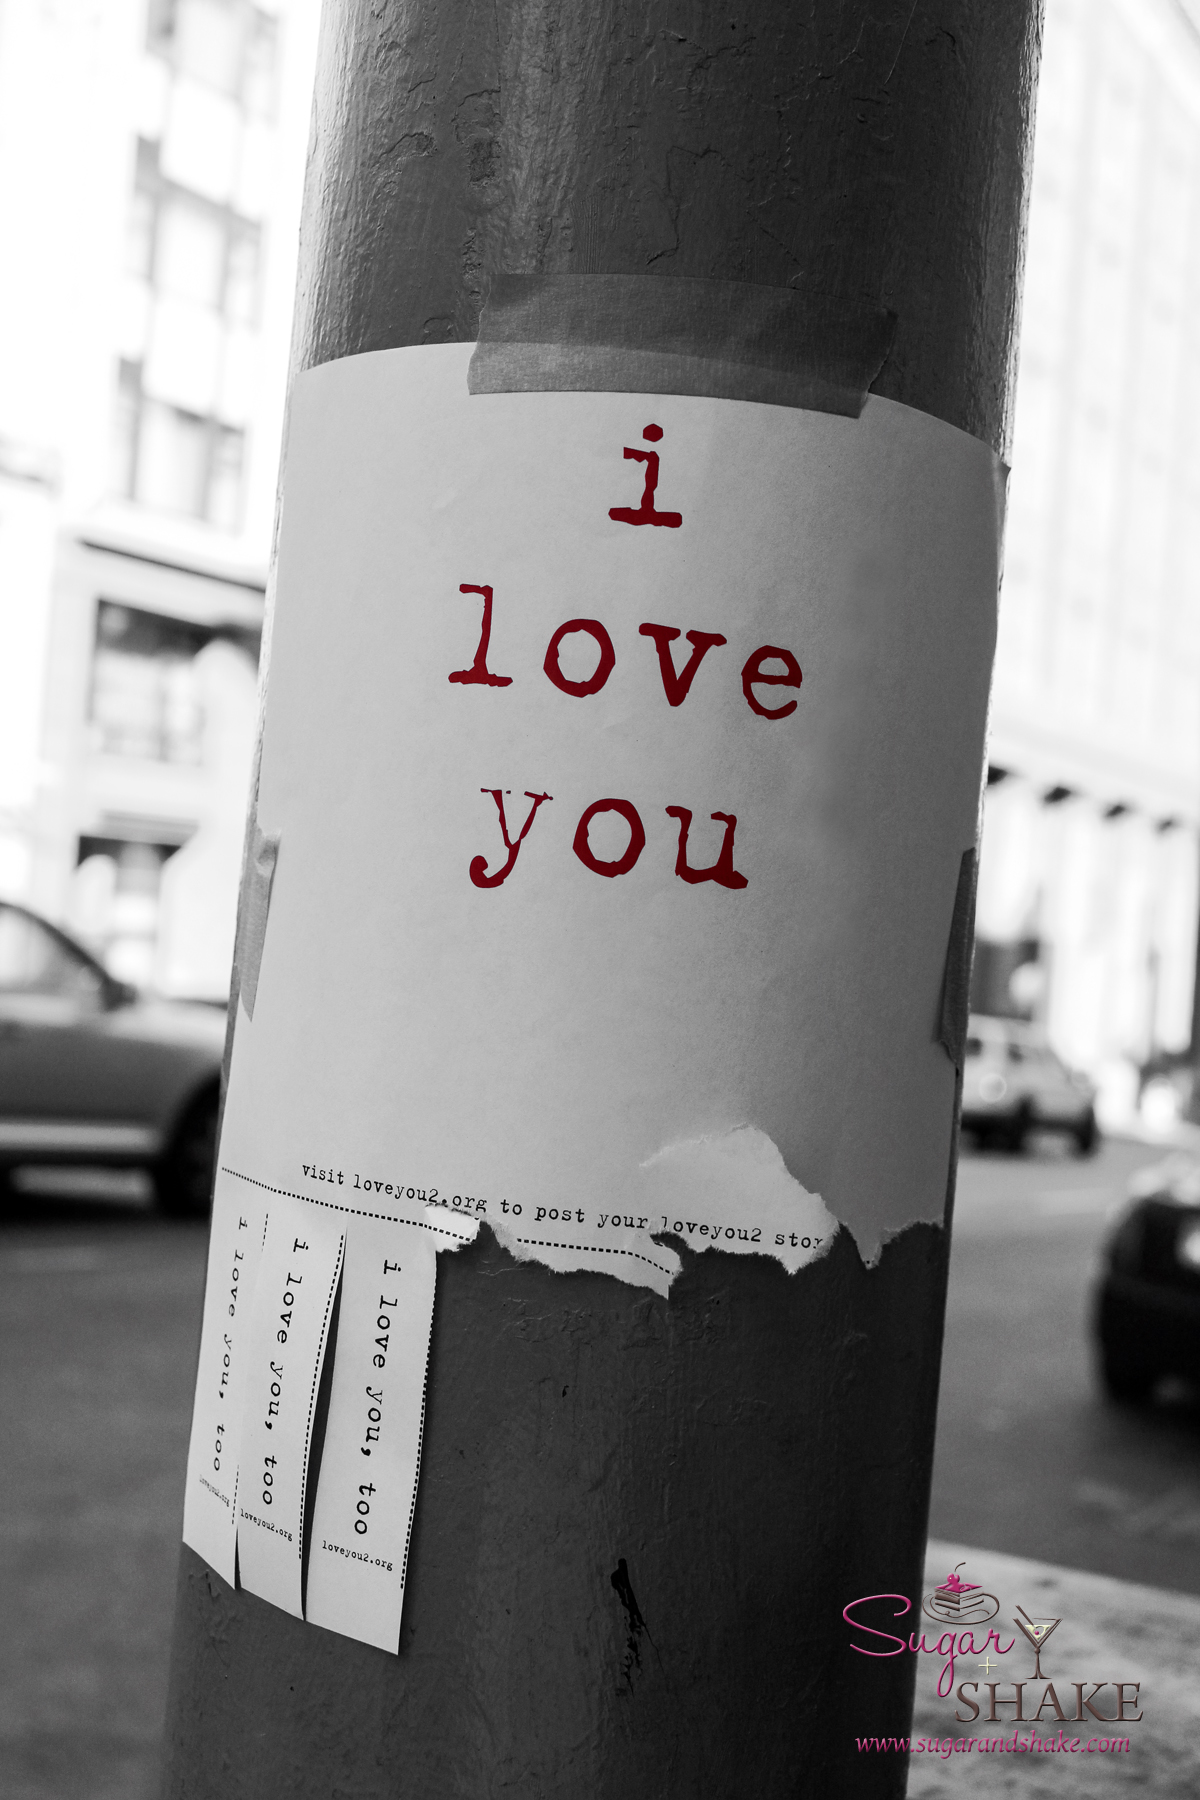 A message of love in San Francisco. © 2014 Sugar + Shake